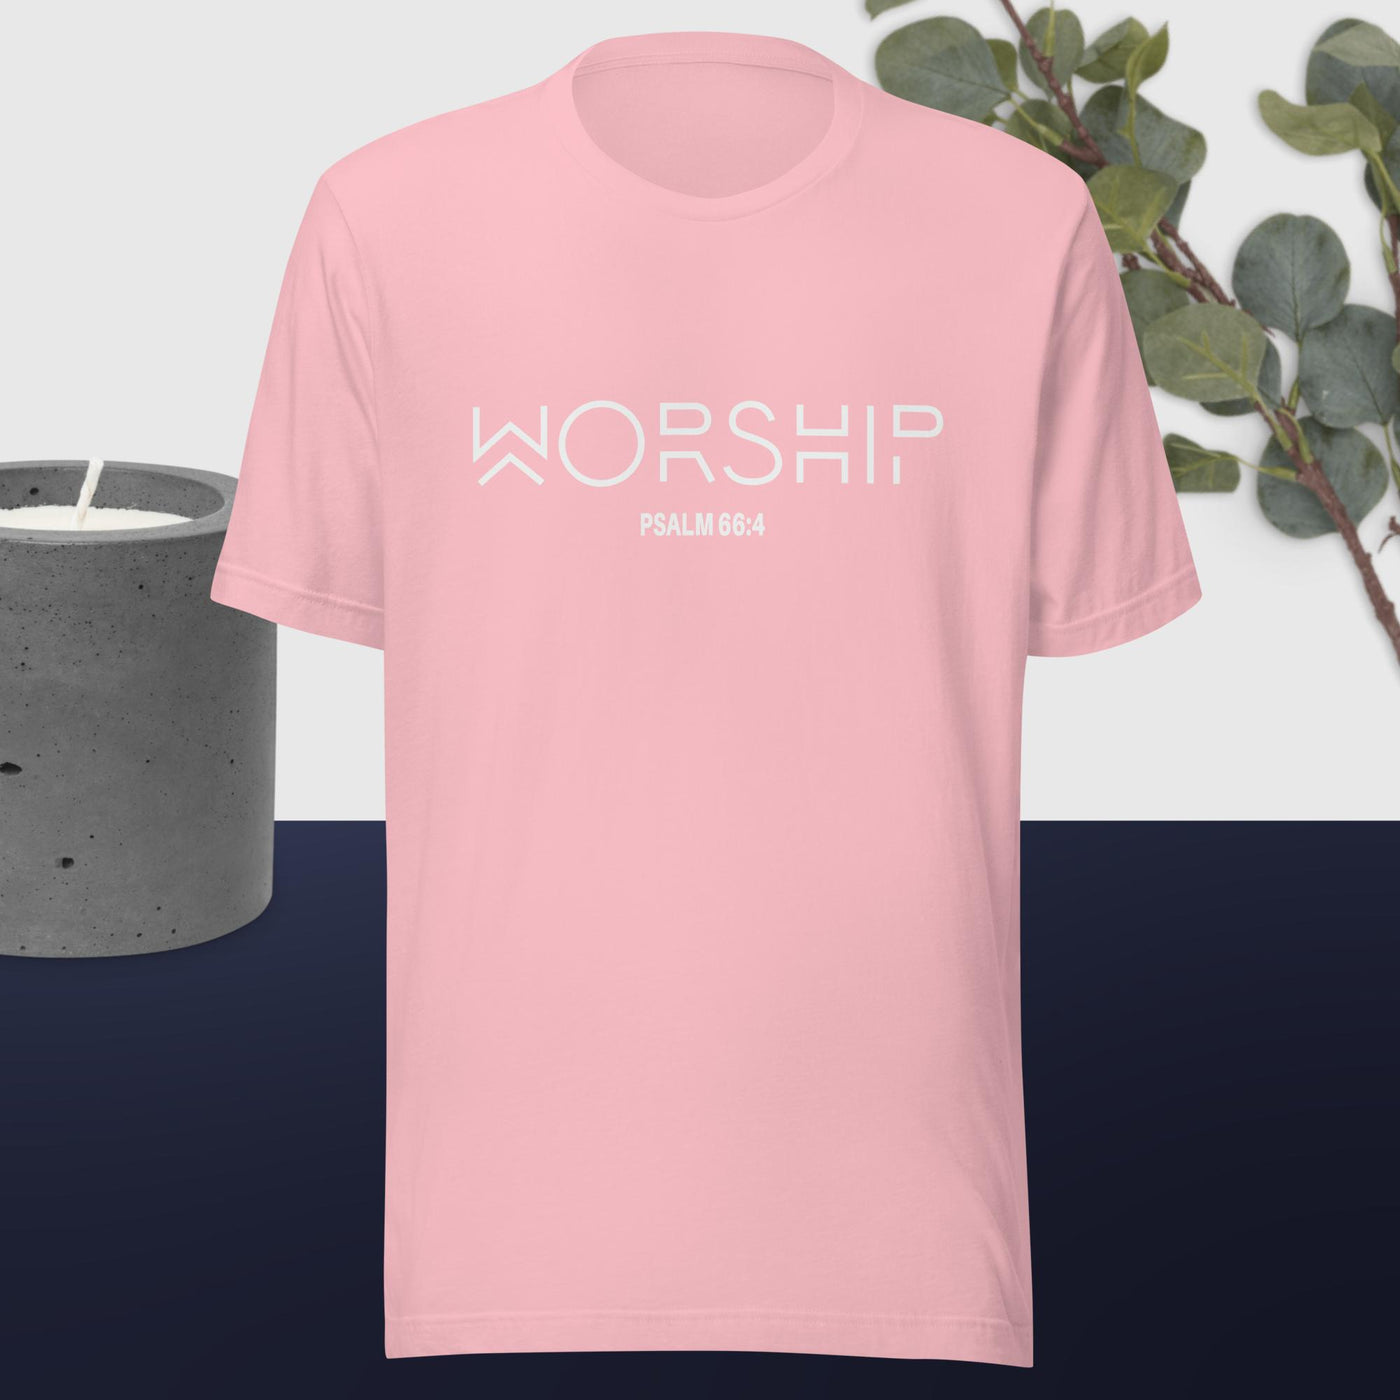 F&H Worship t-shirt